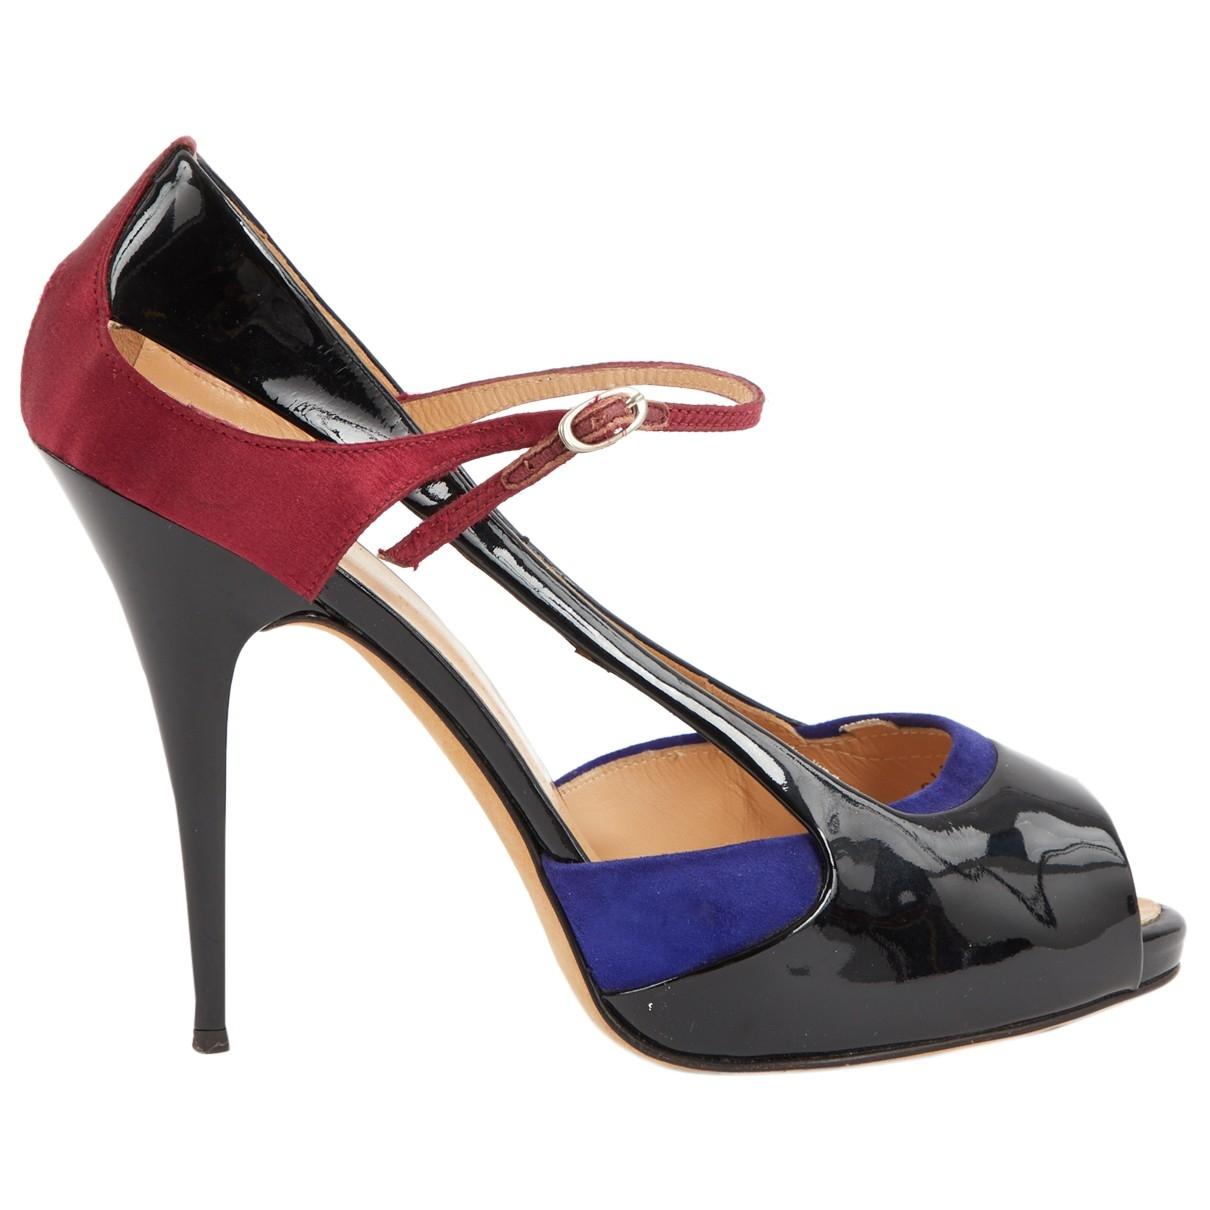 Lyst - Giuseppe Zanotti Multicolour Patent Leather Heels